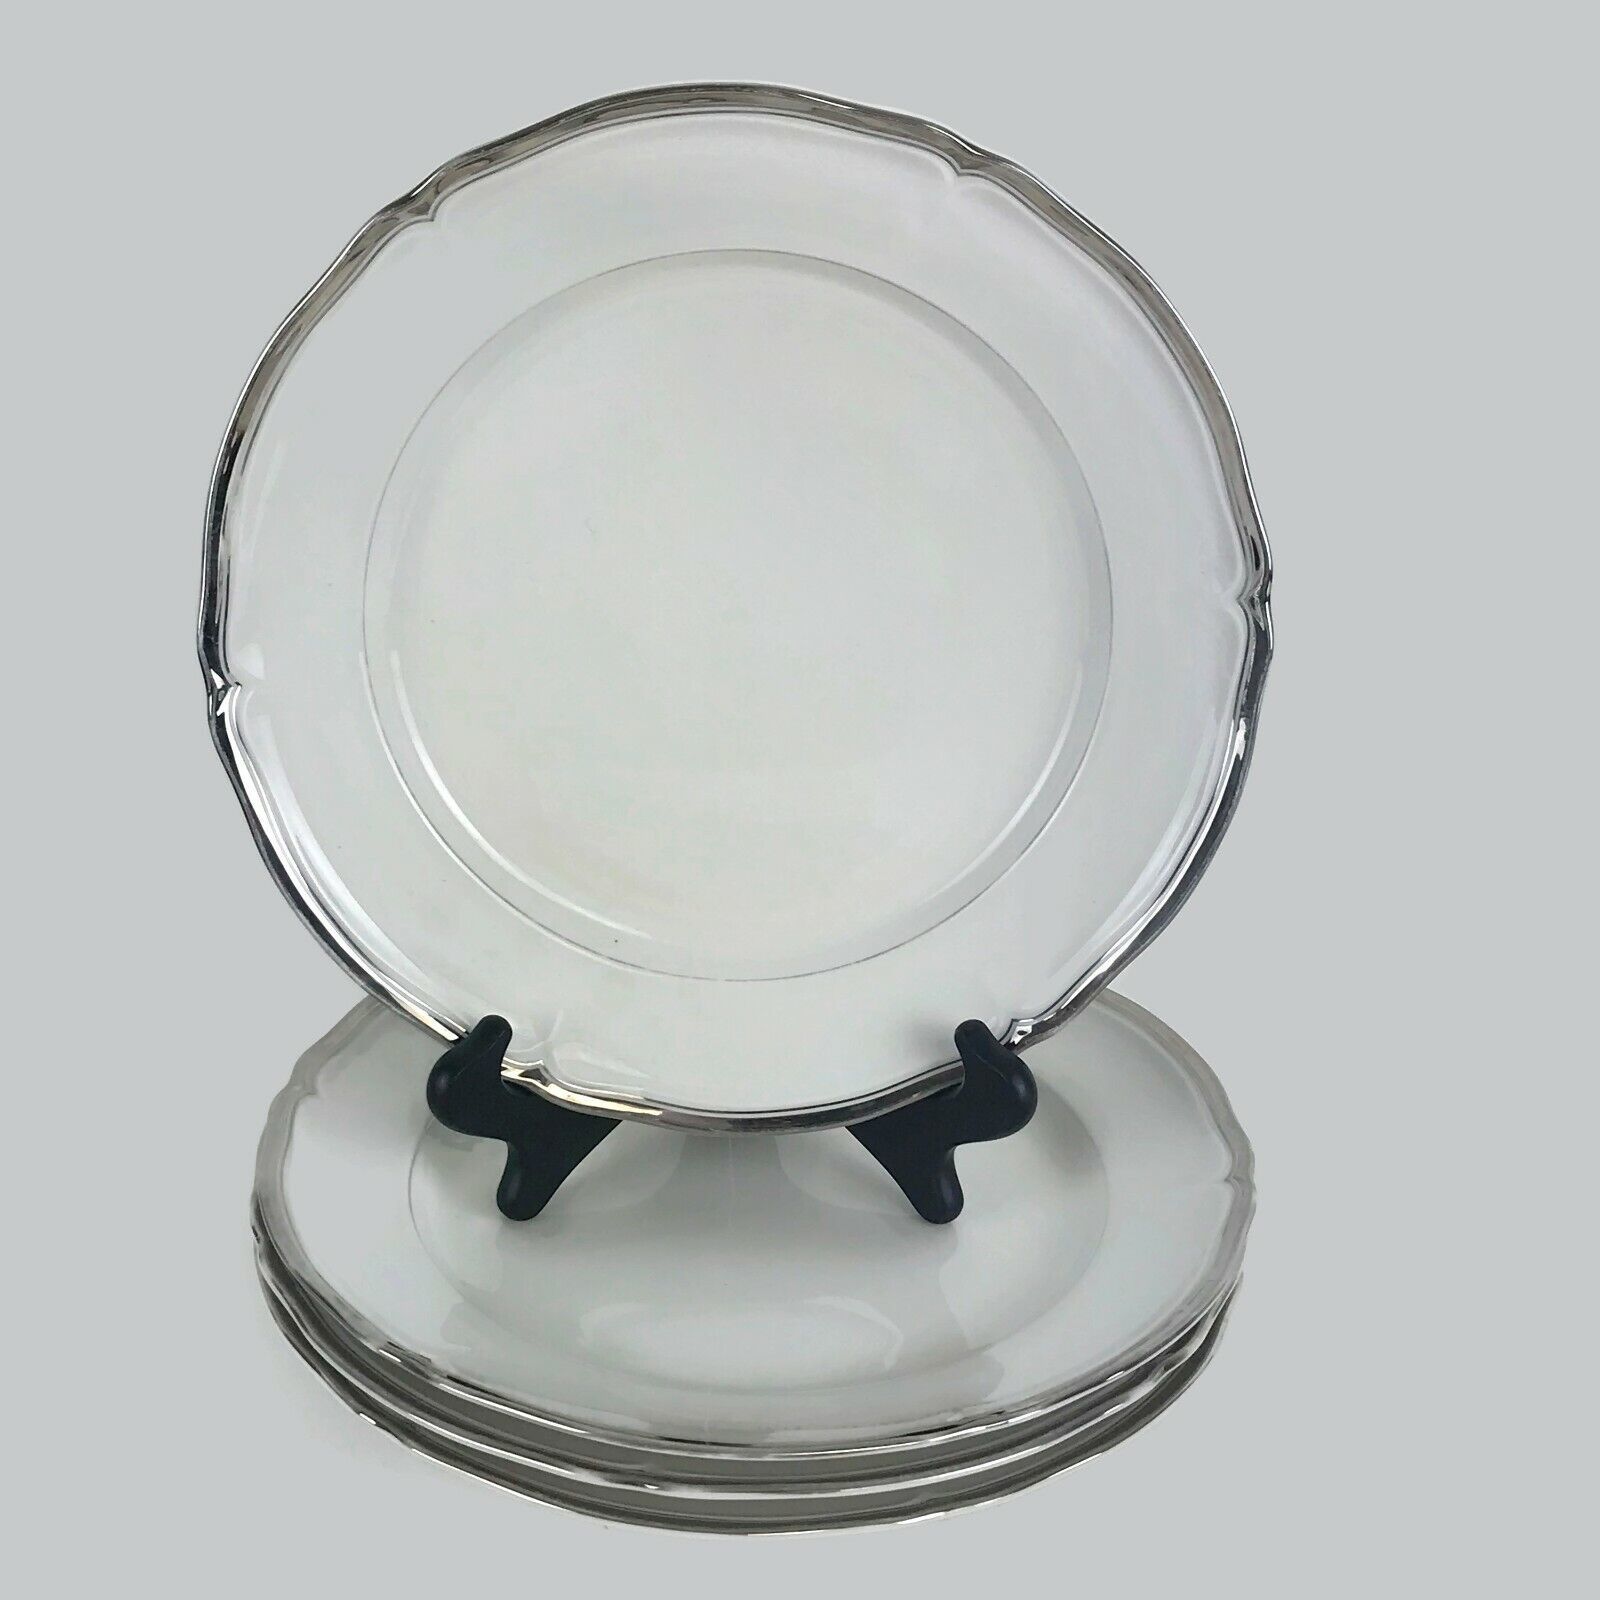 Primary image for Mikasa Hyde Park Platinum Dinner Plates Four Fine China Dinnerware White 10-1/2"